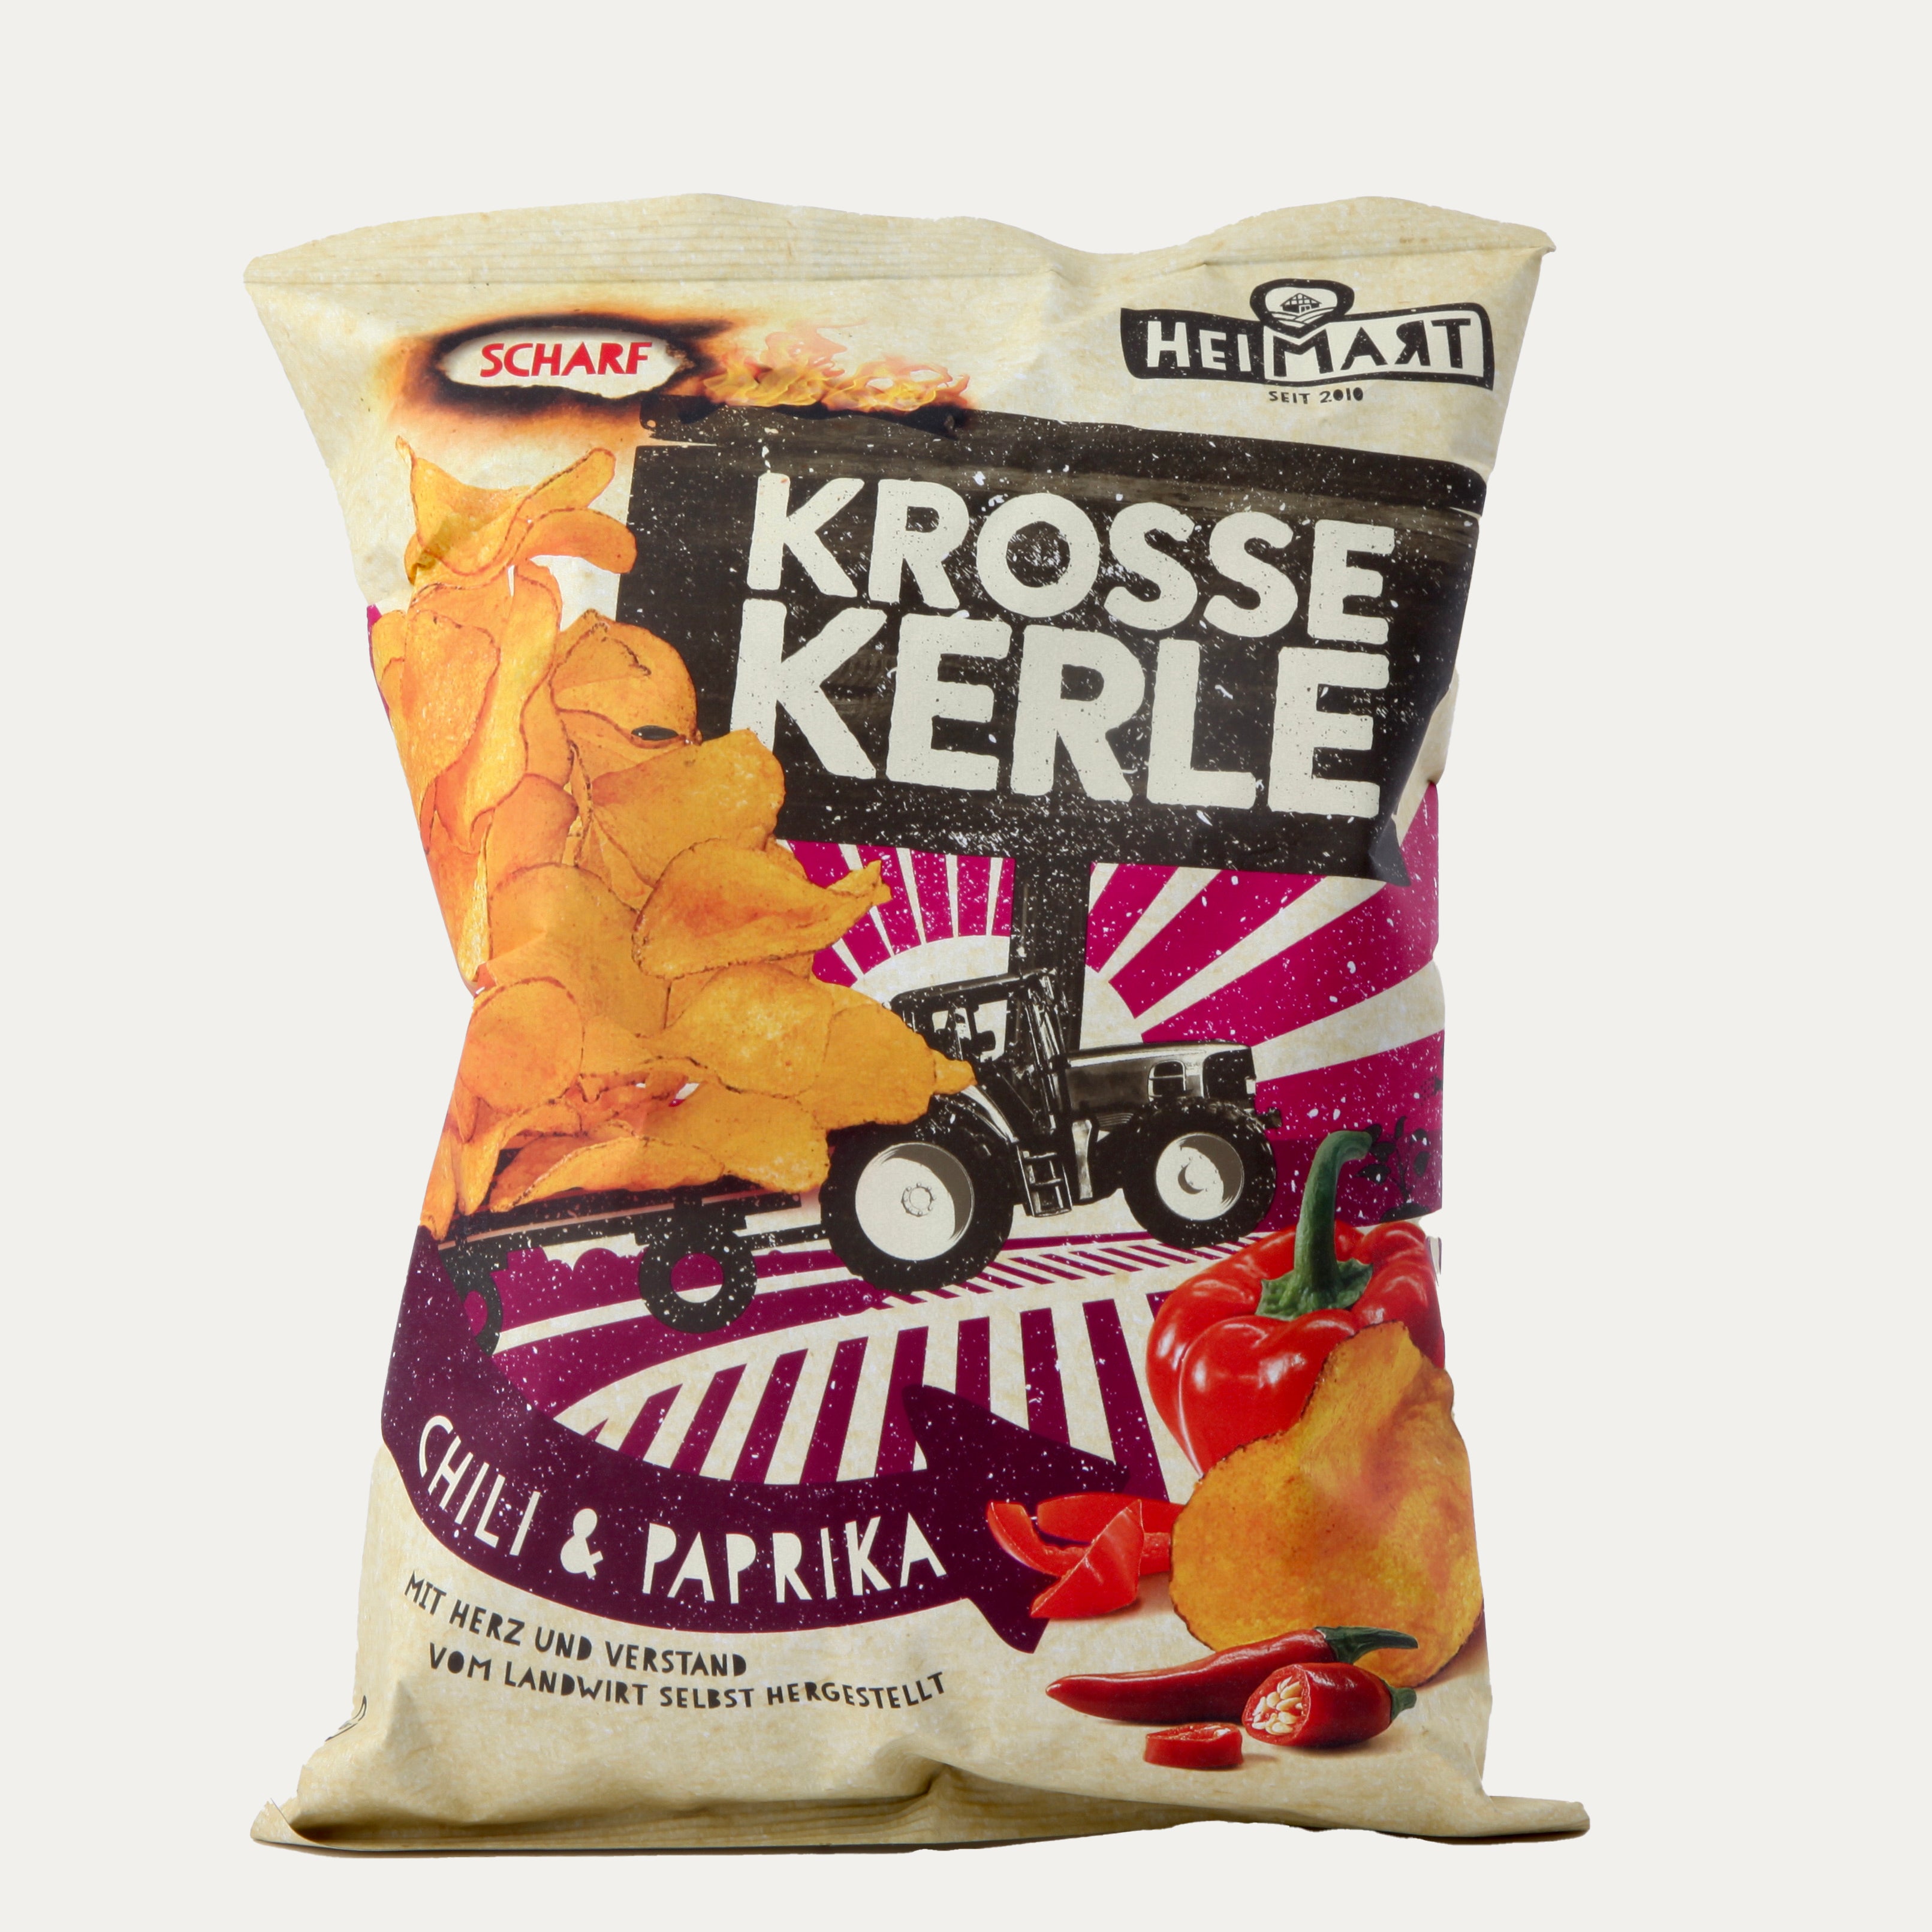 Krosse Kerle - Kartoffelchips Karamel & Salz – Chips 115g